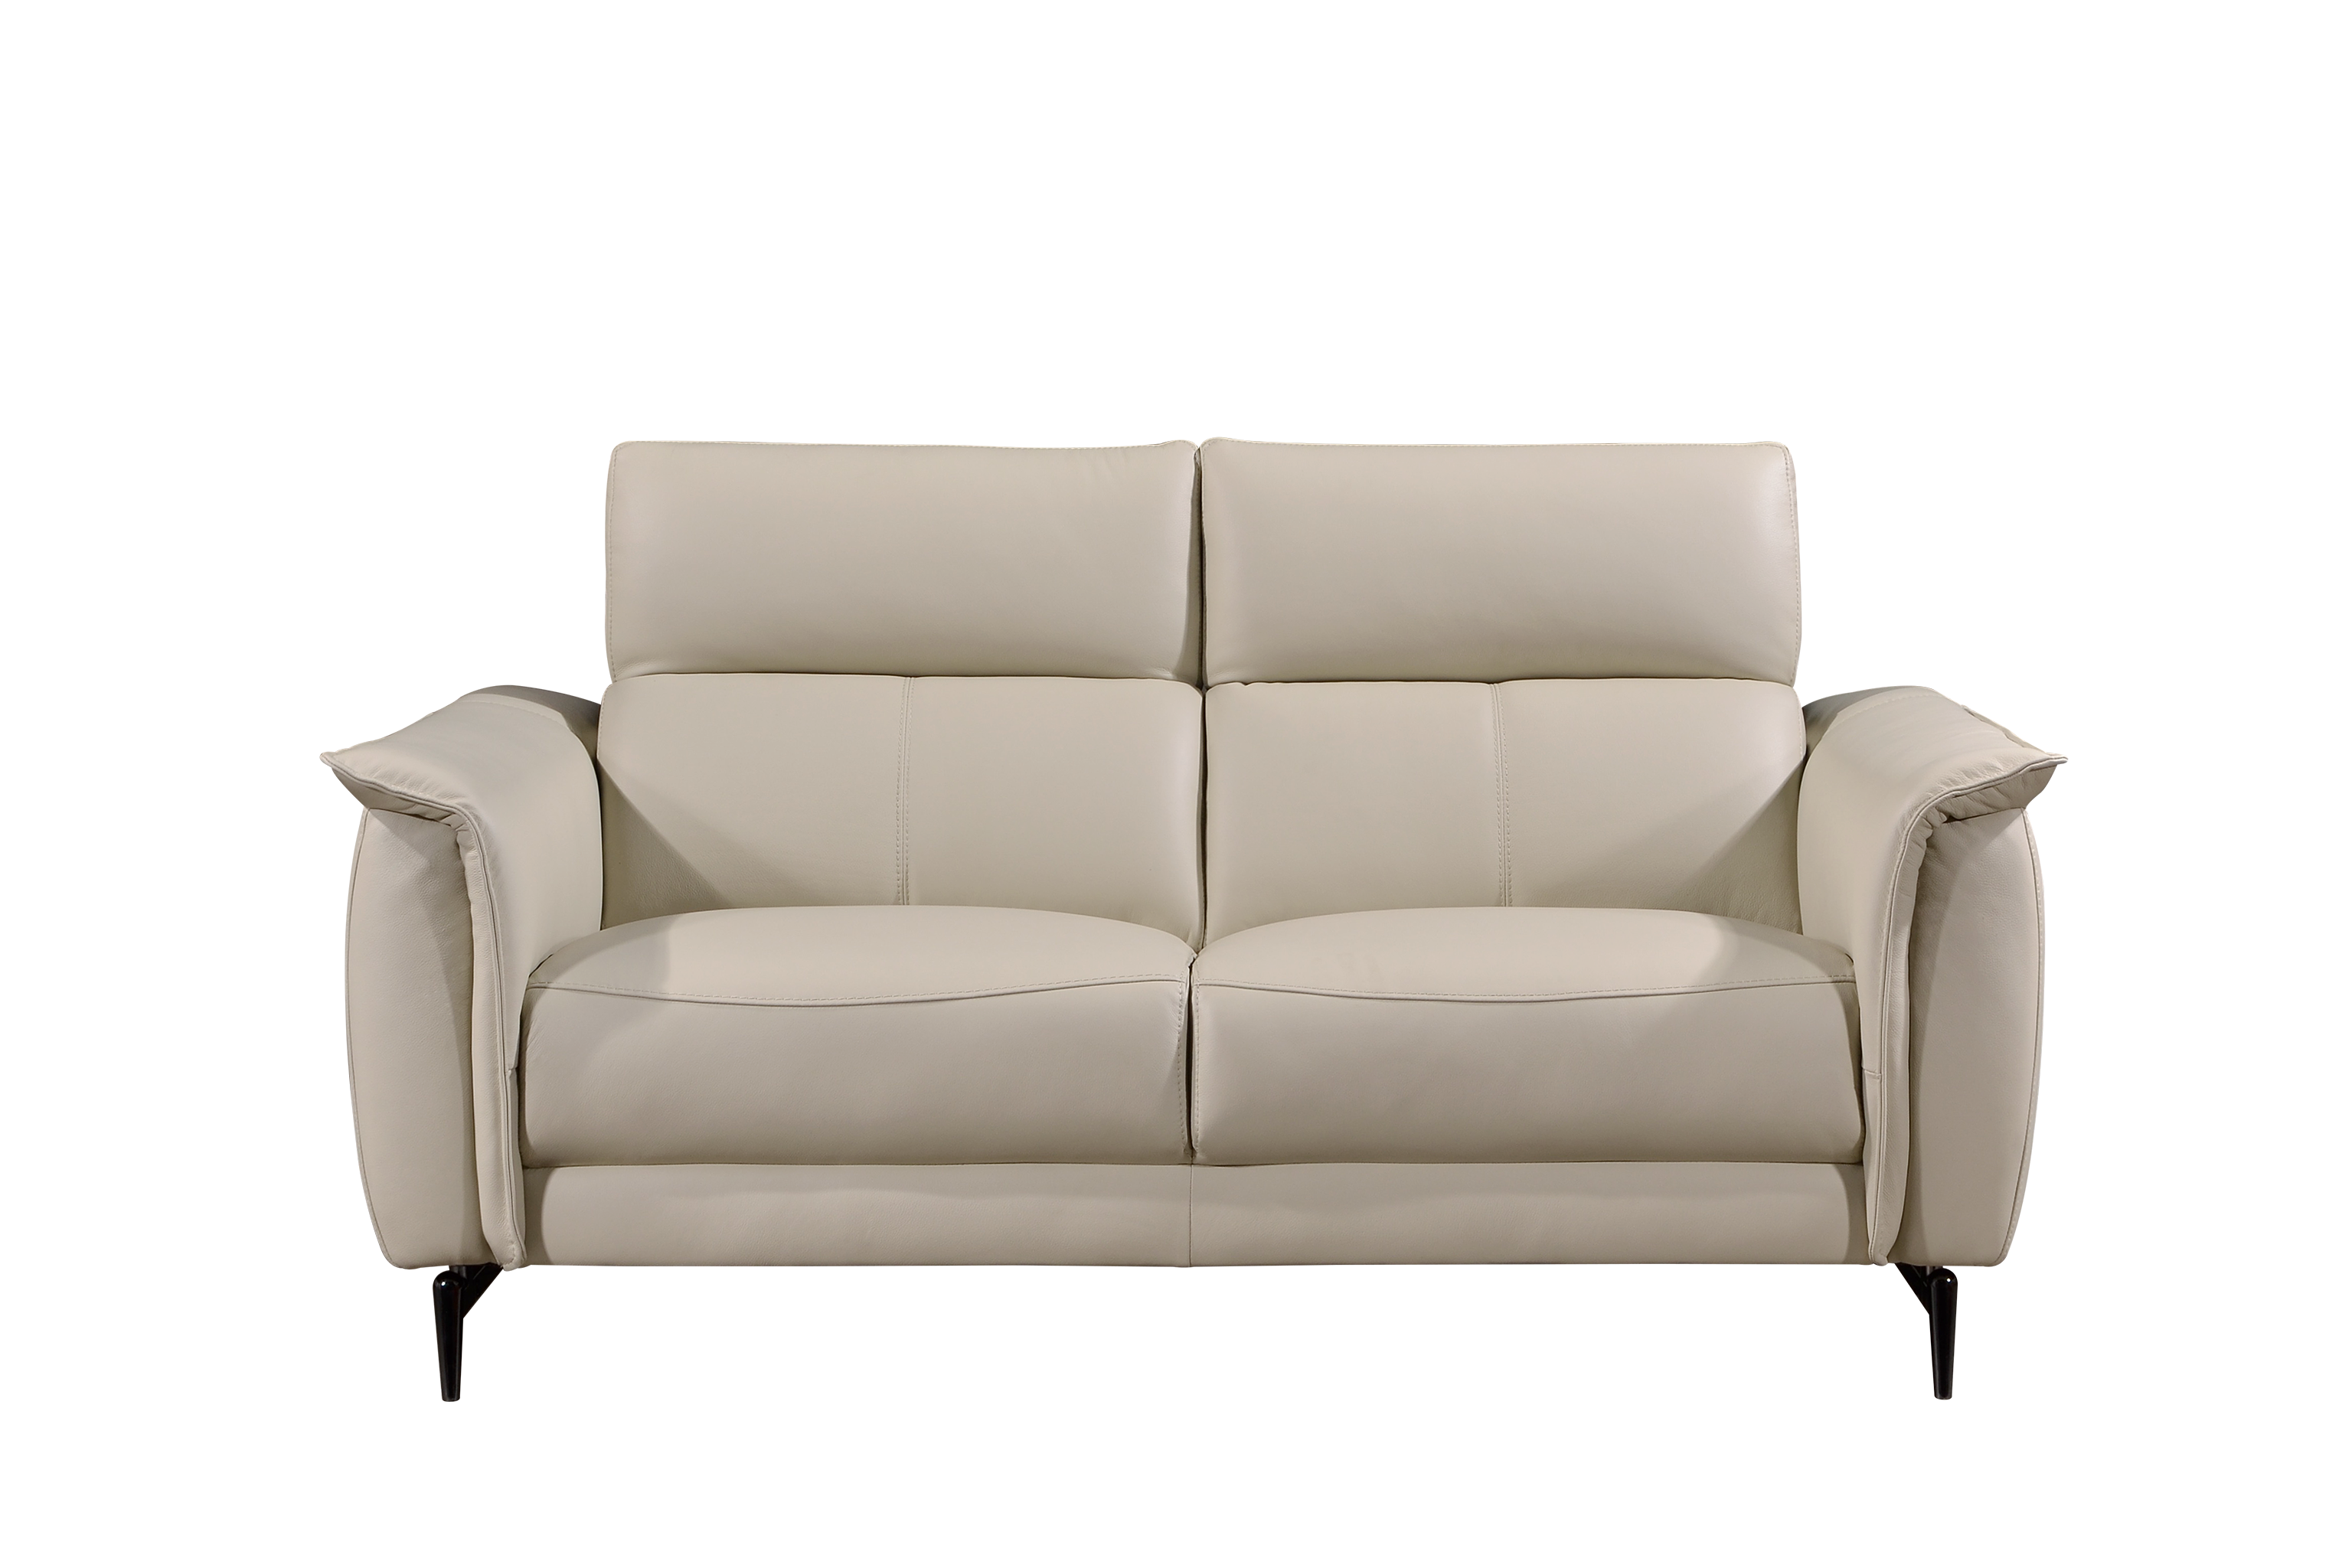 RIVIERA 2 Seater Sofa In Leather By Castilla